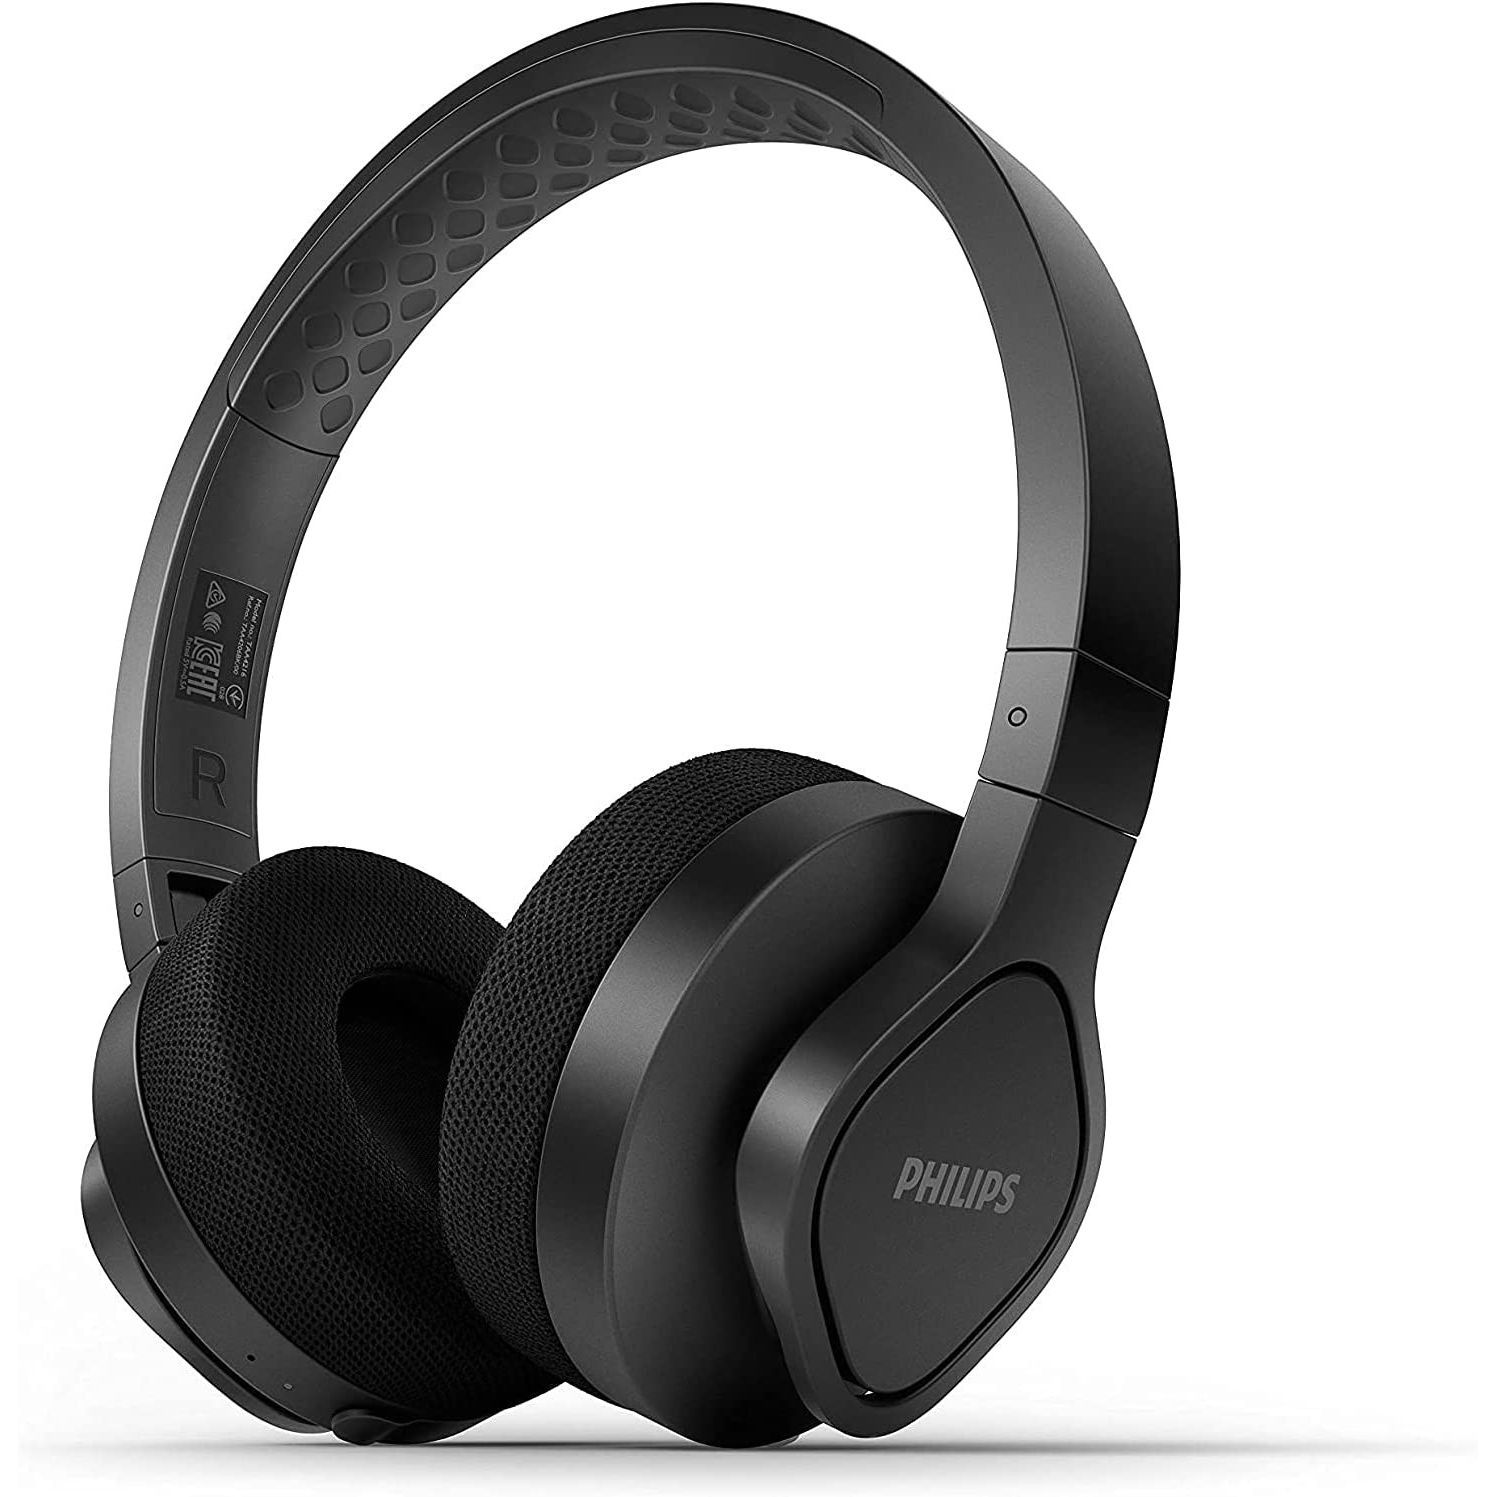 Philips A4216 wireless headphones